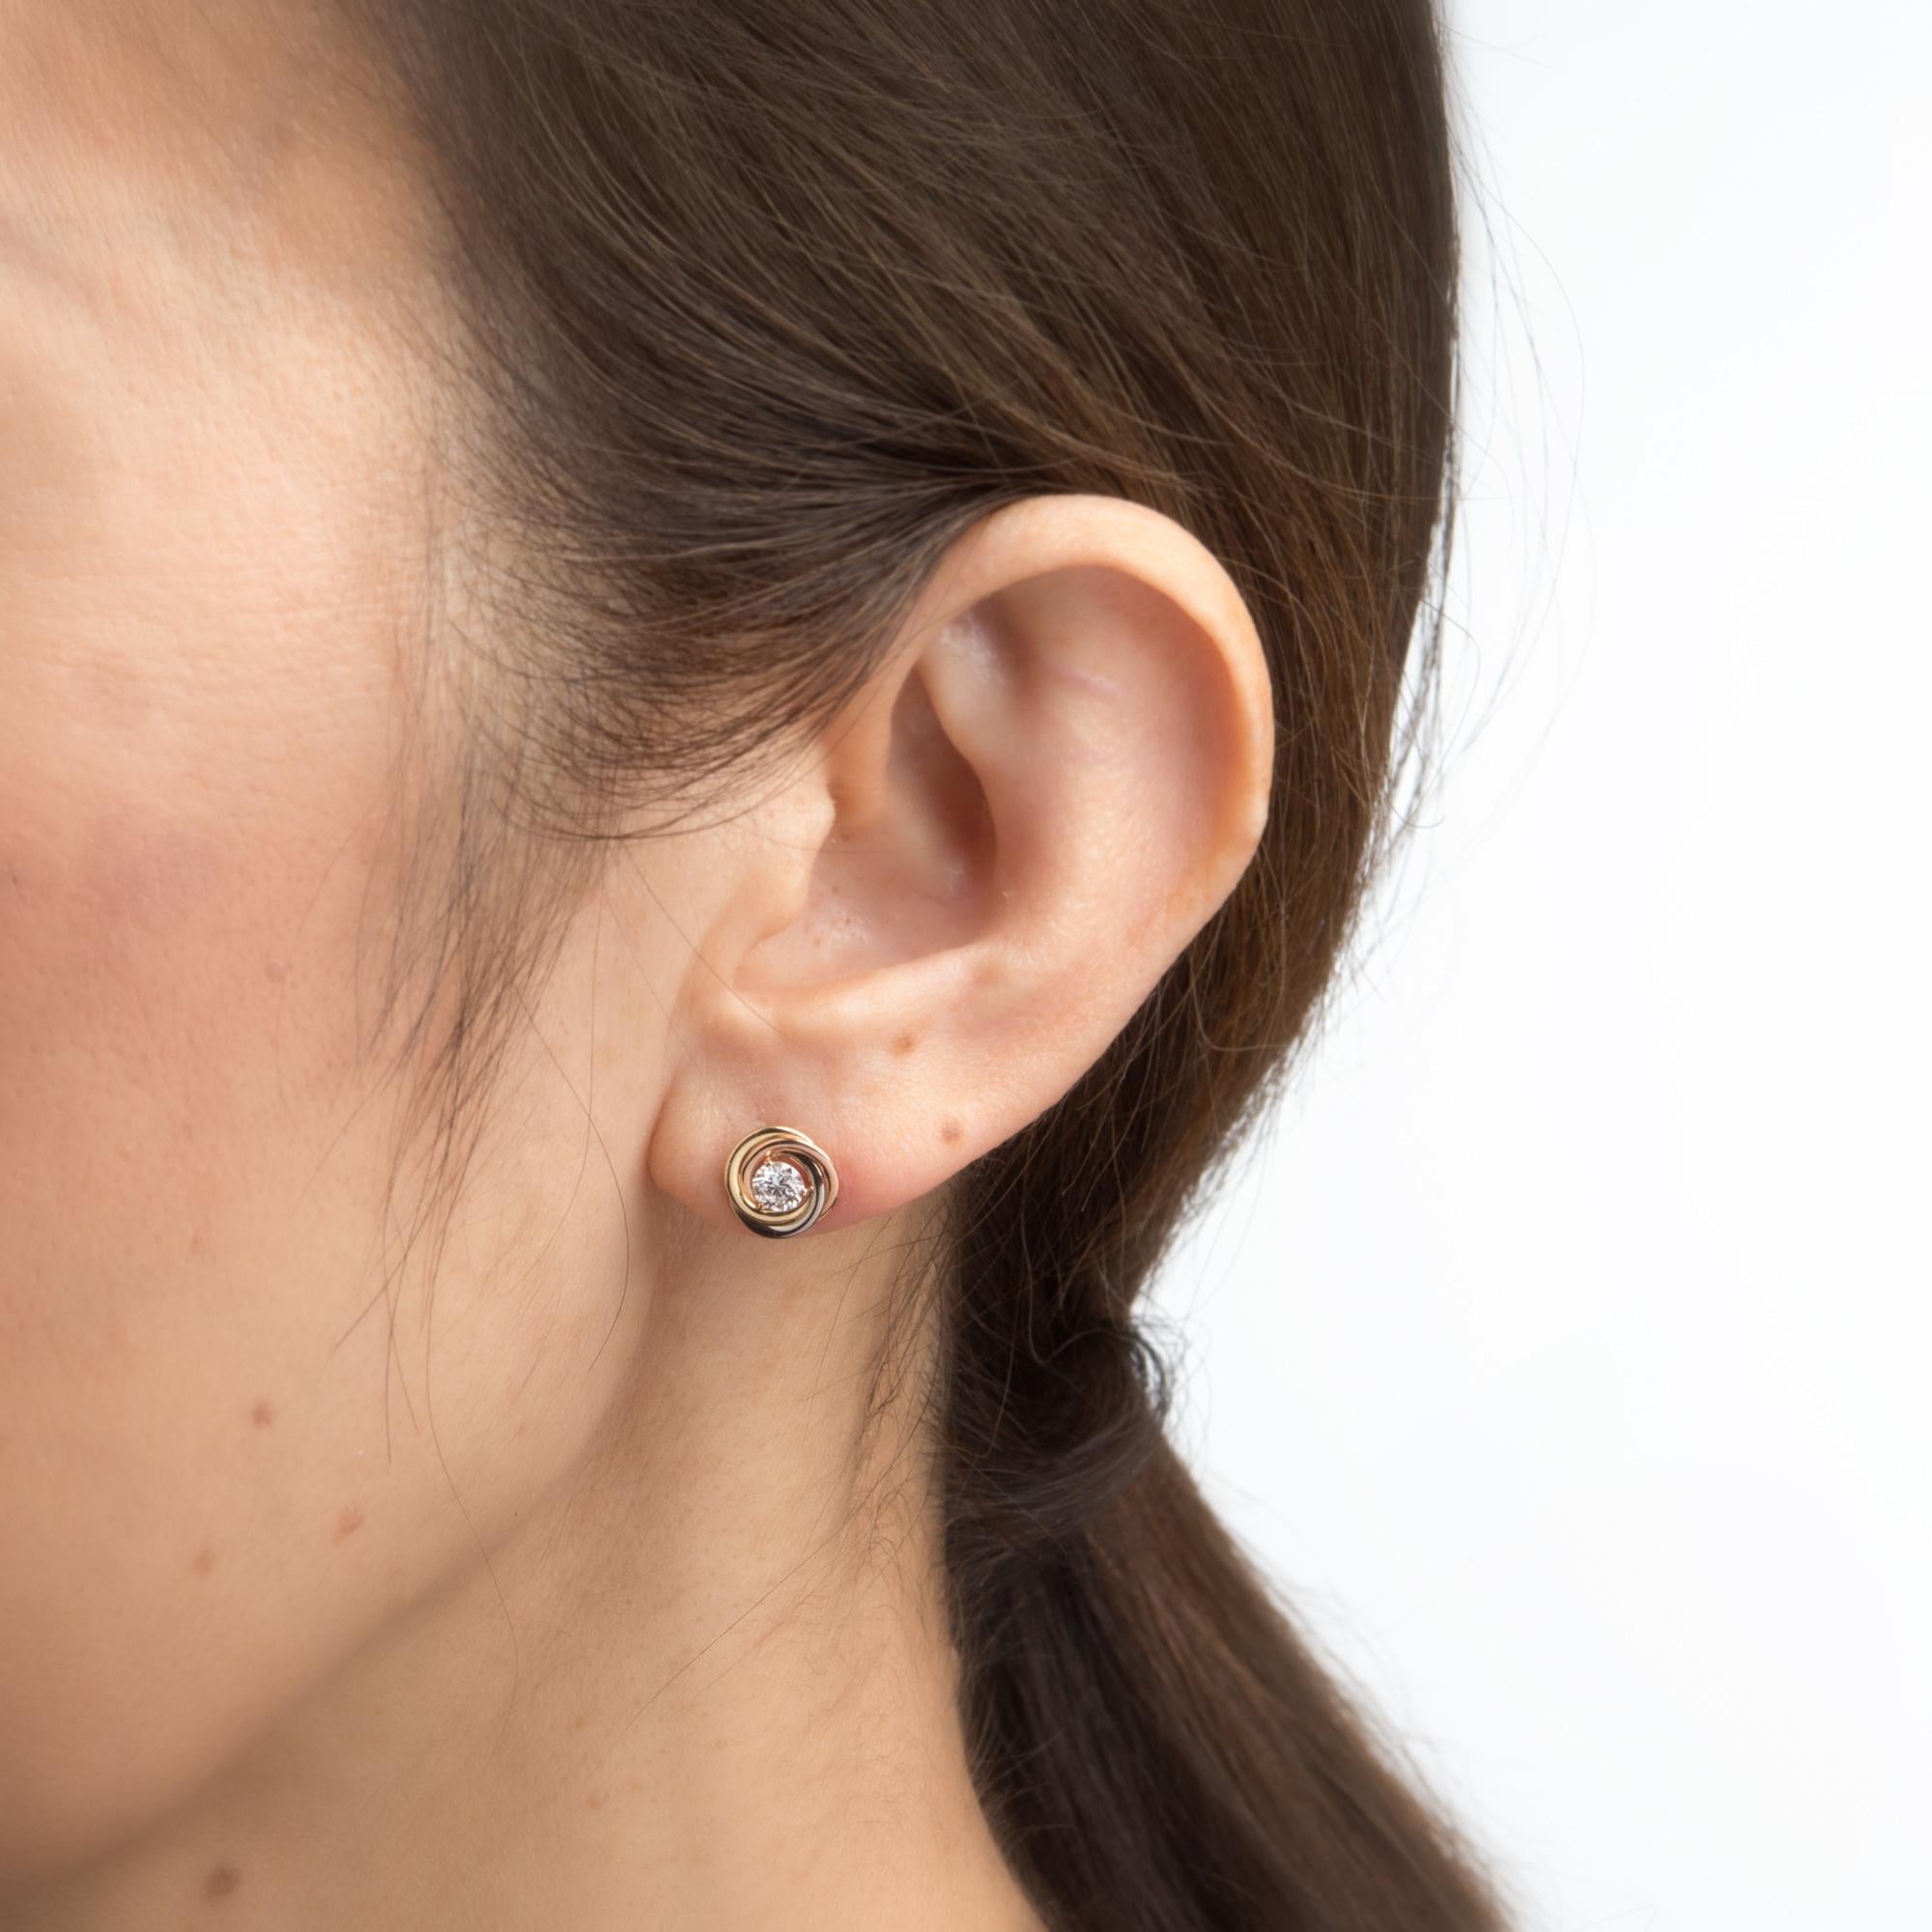 cartier trinity earrings price